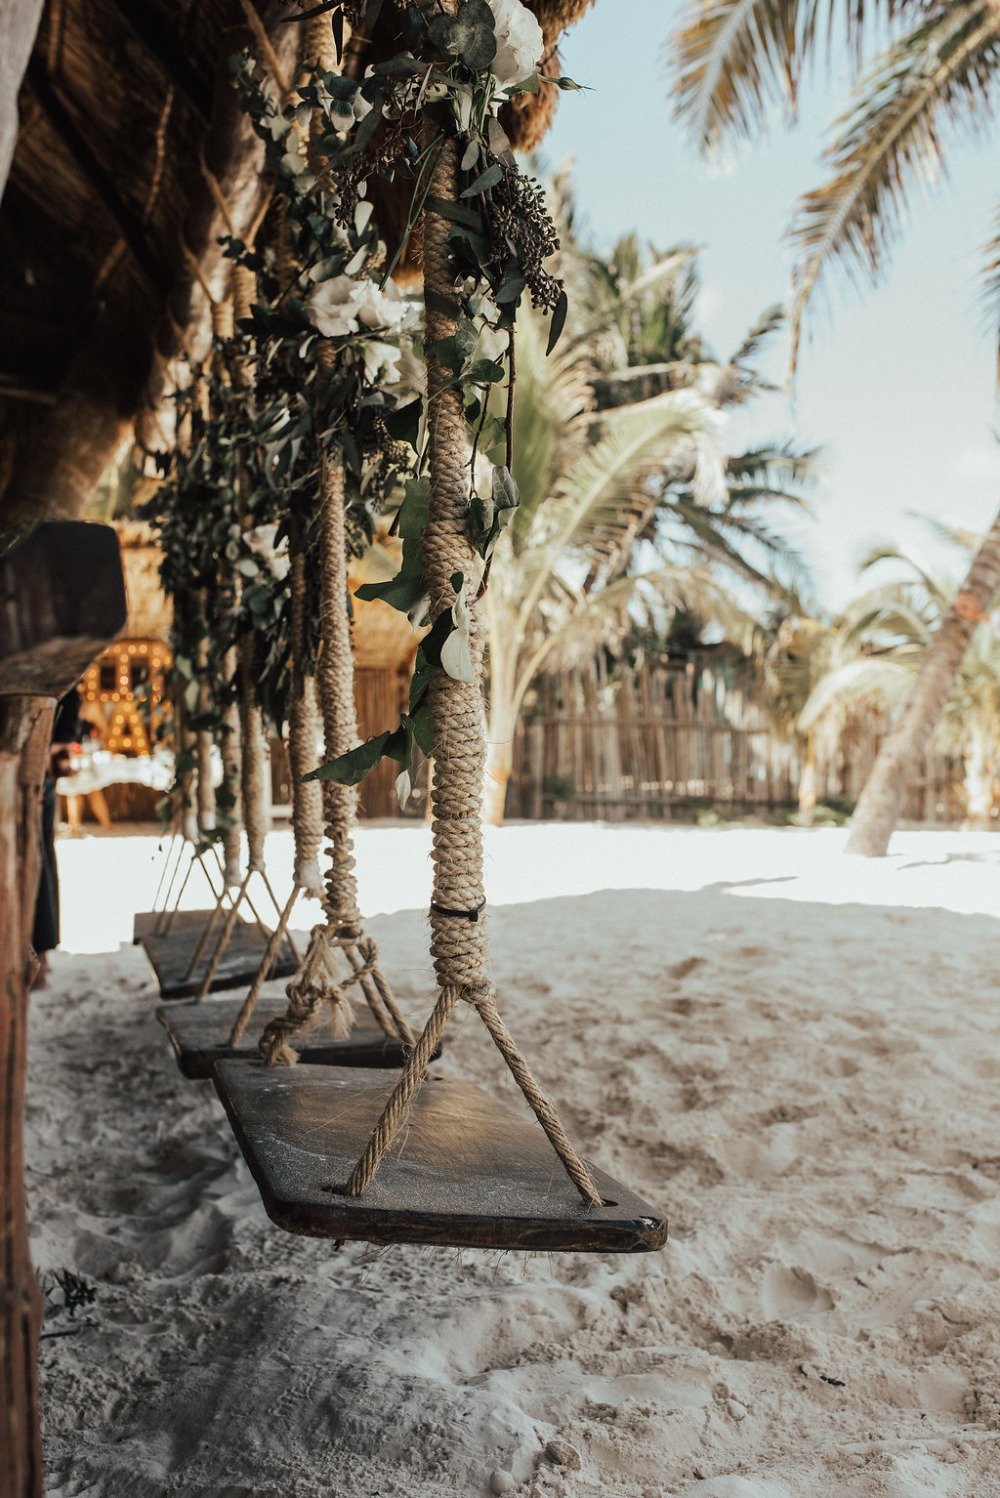 beach bar with swings